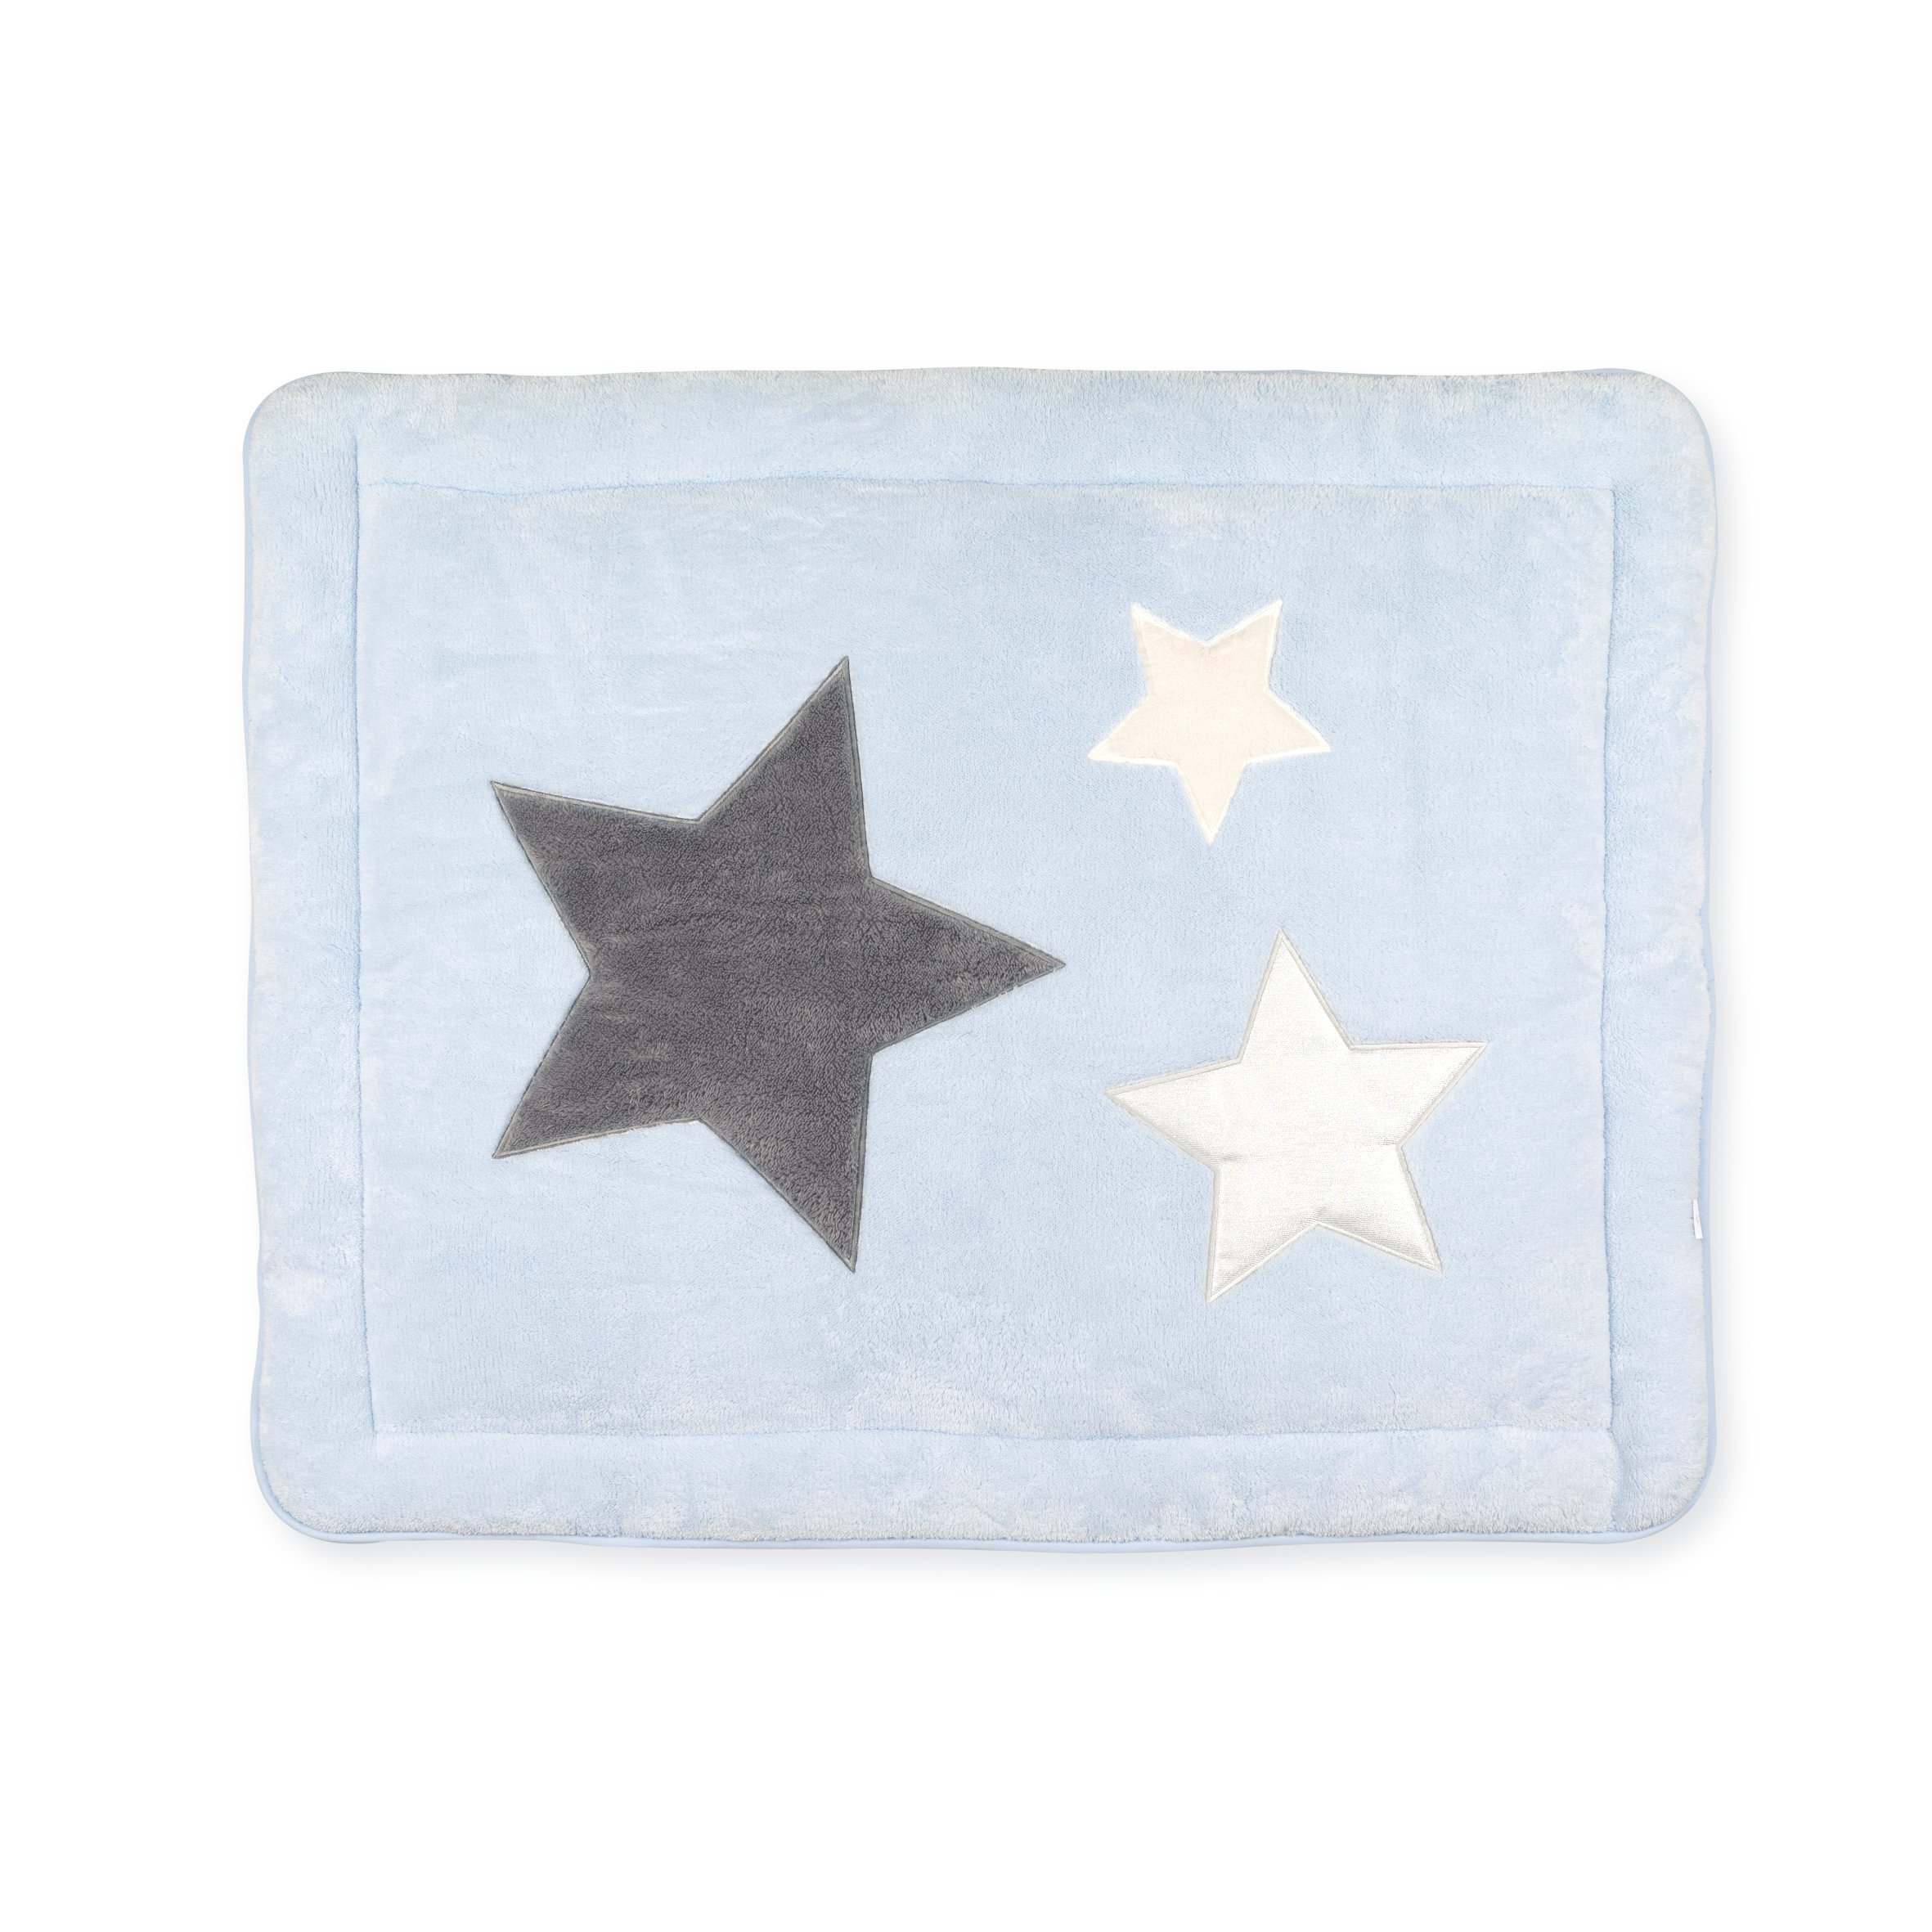 Padded play mat Pady softy + terry 75x95cm STARY Stars print light blue